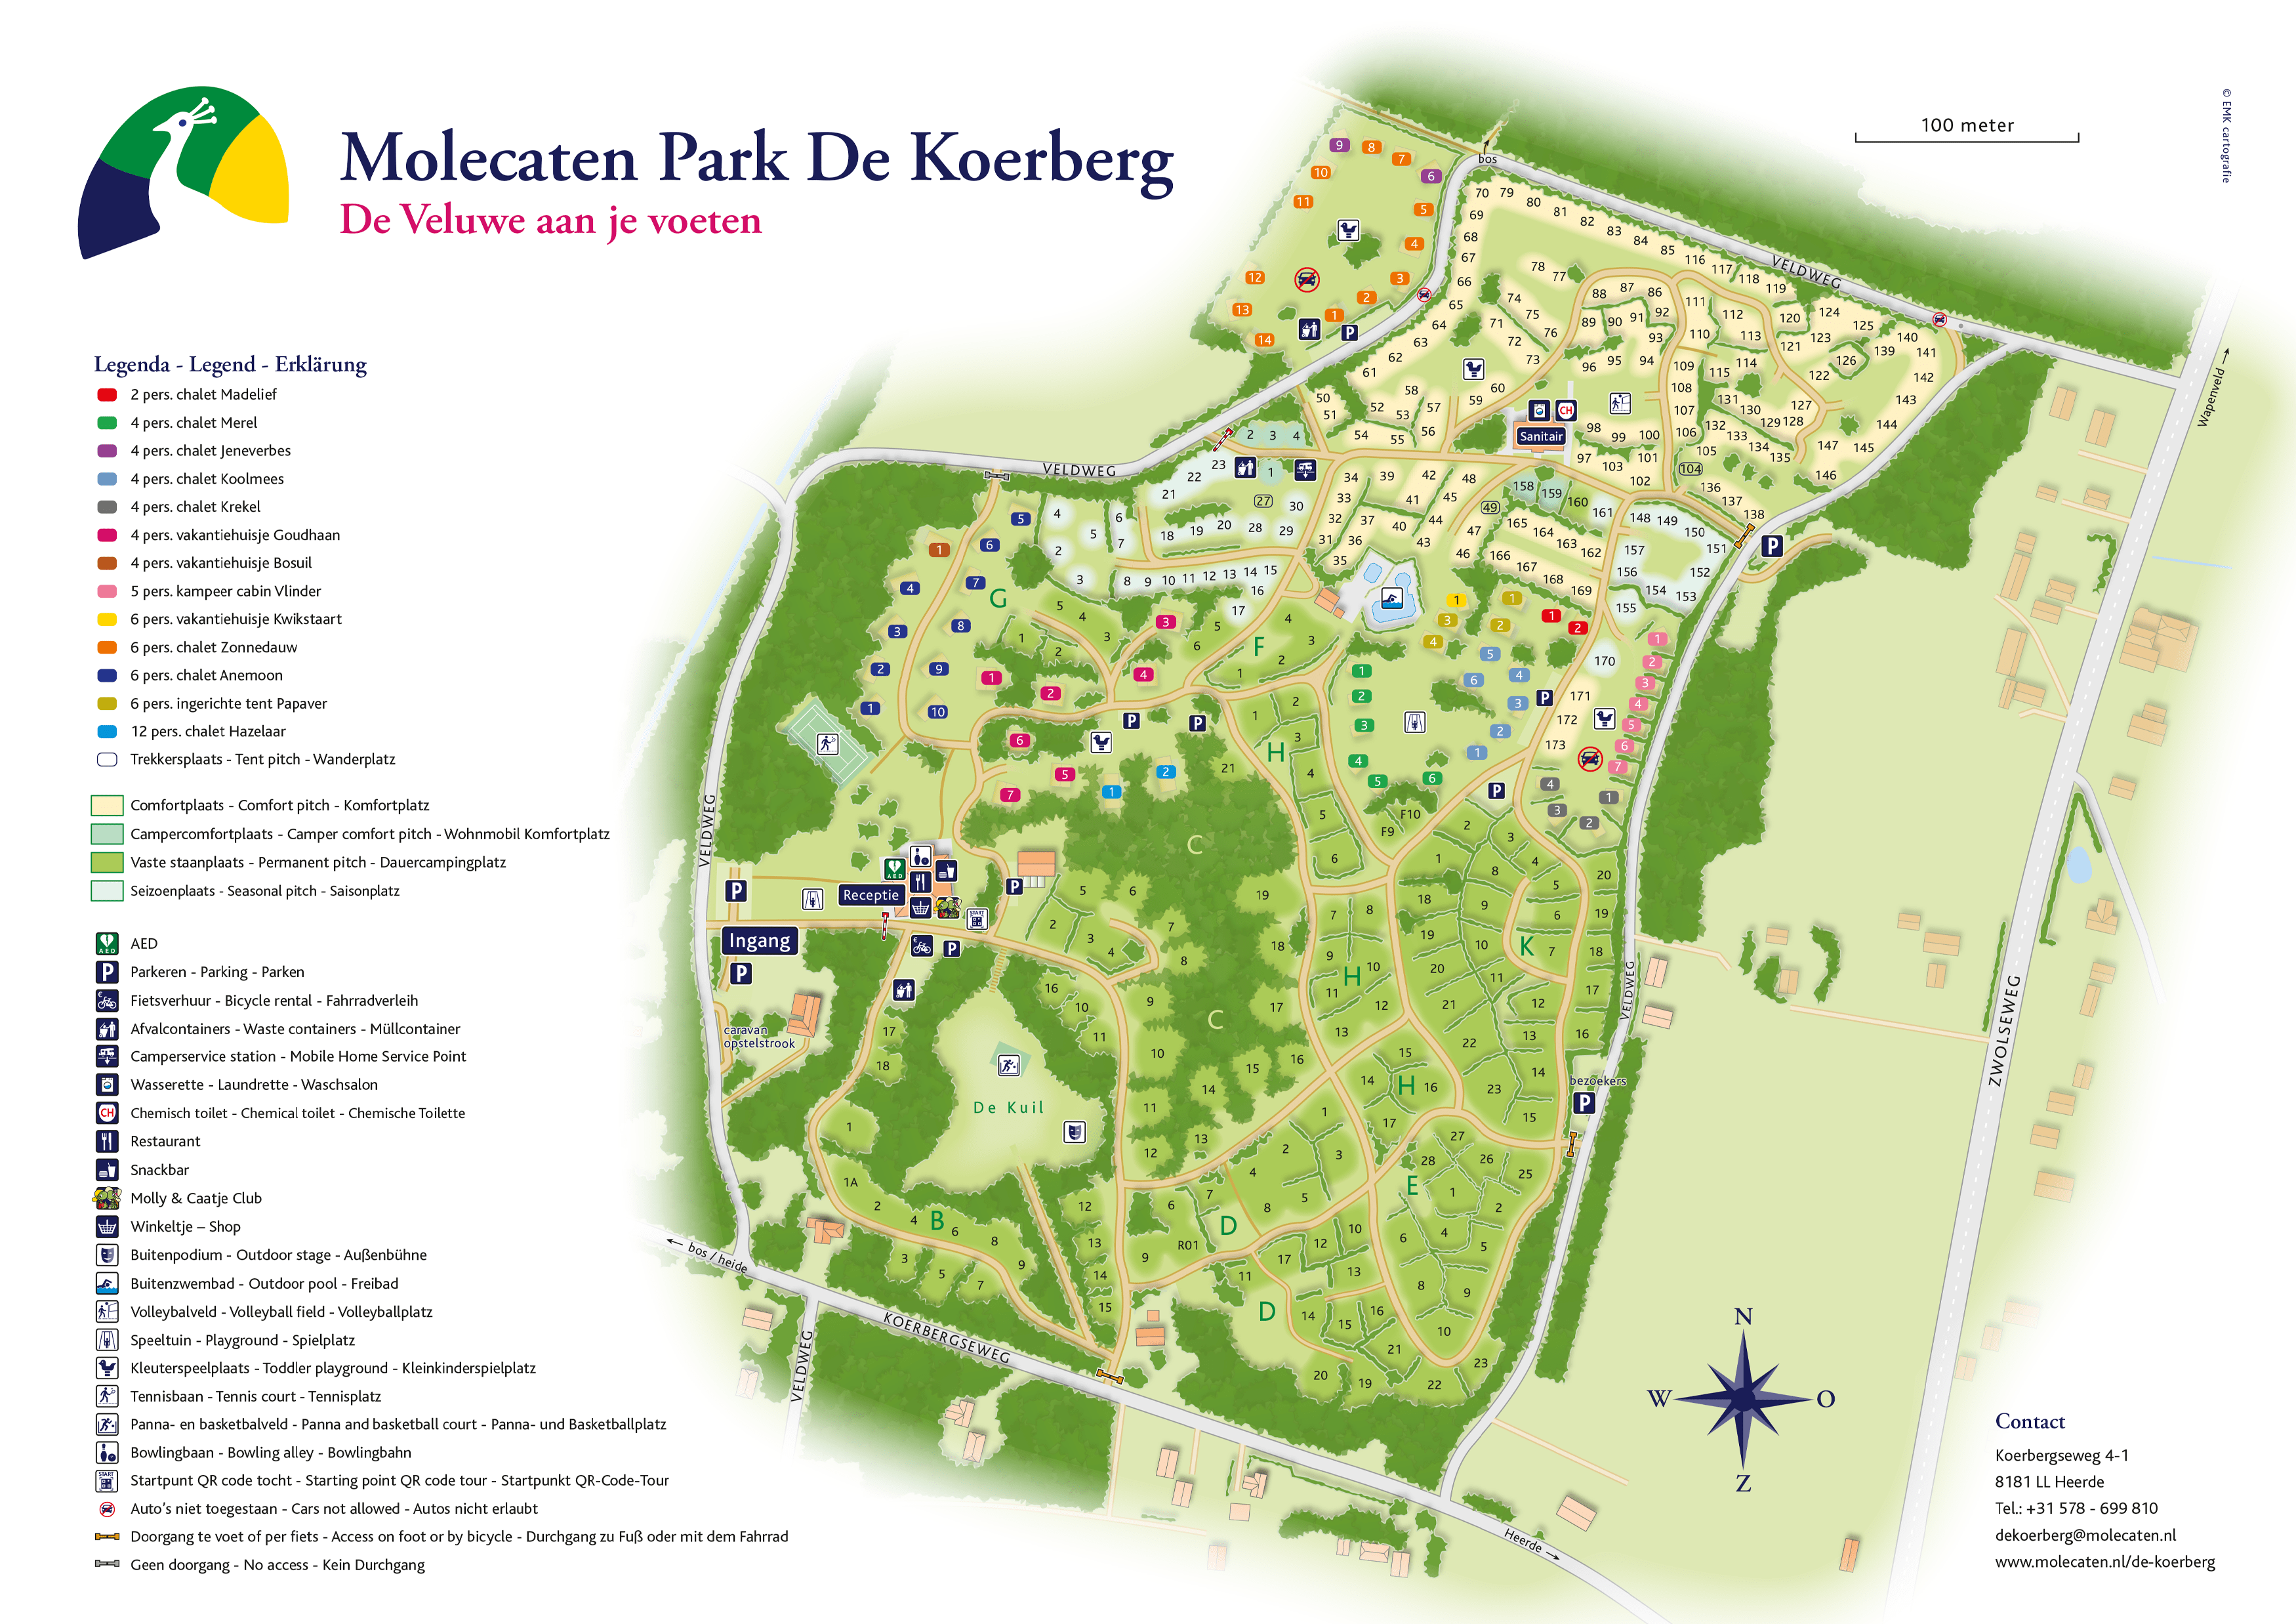 Molecaten Park De Koerberg accommodation.parkmap.alttext